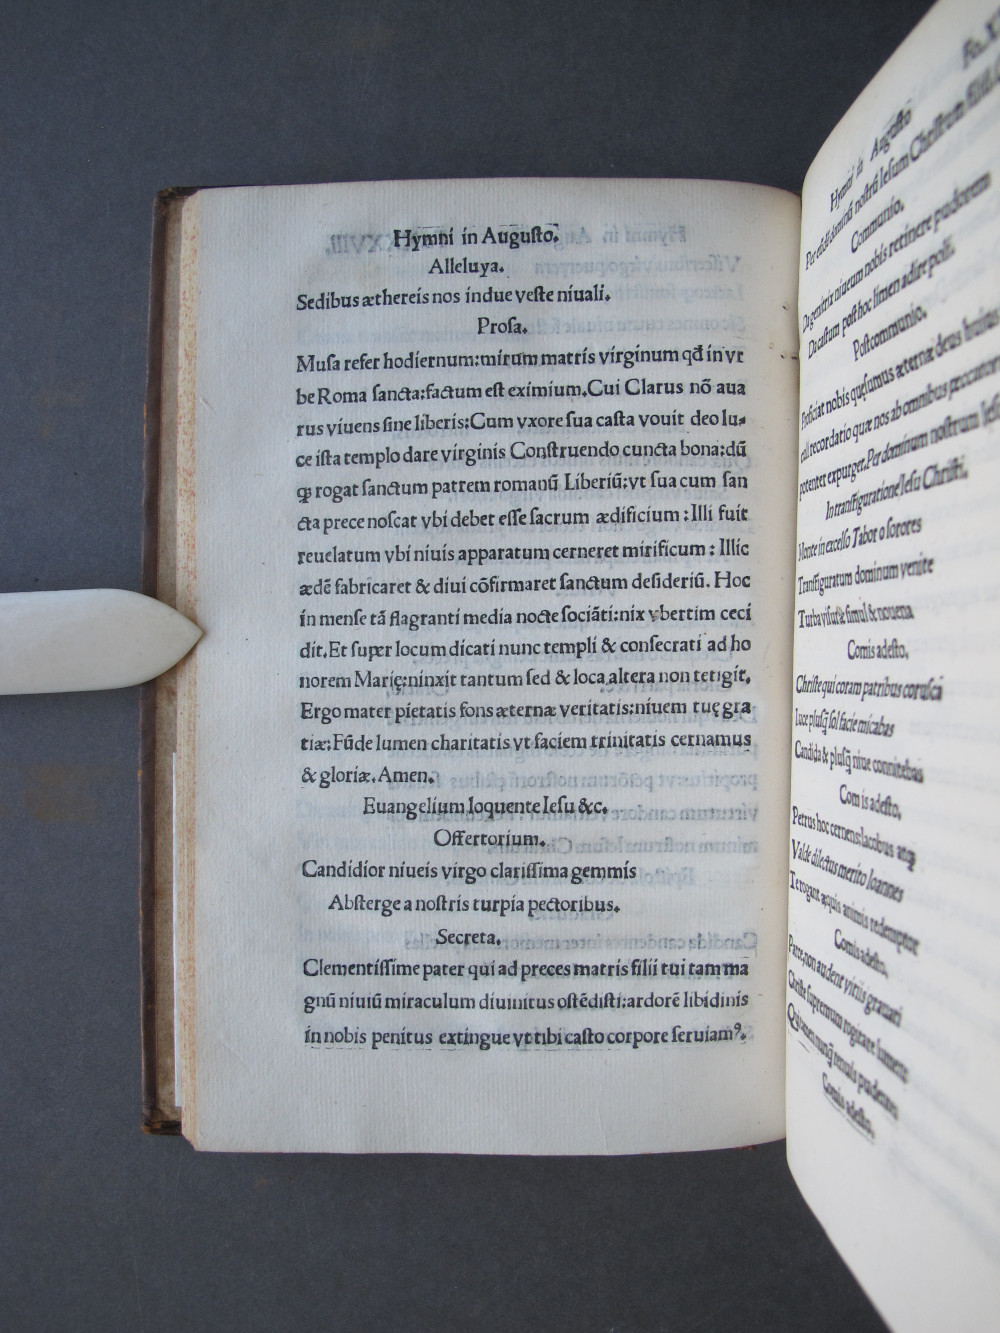 Folio 38 verso